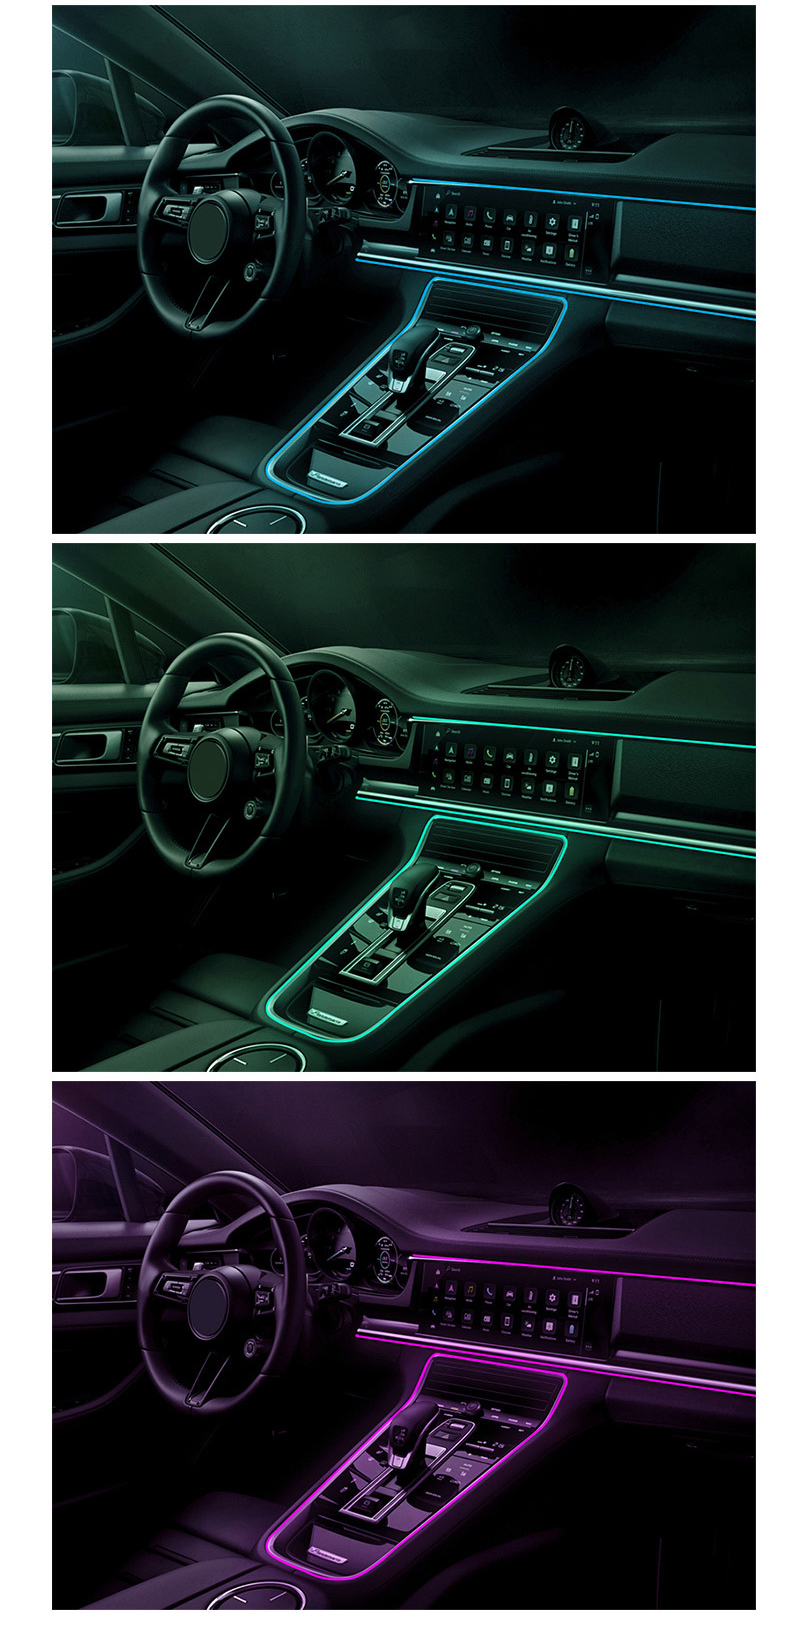 5m) LED Auto Licht Streifen USB Innenraumbeleuchtung